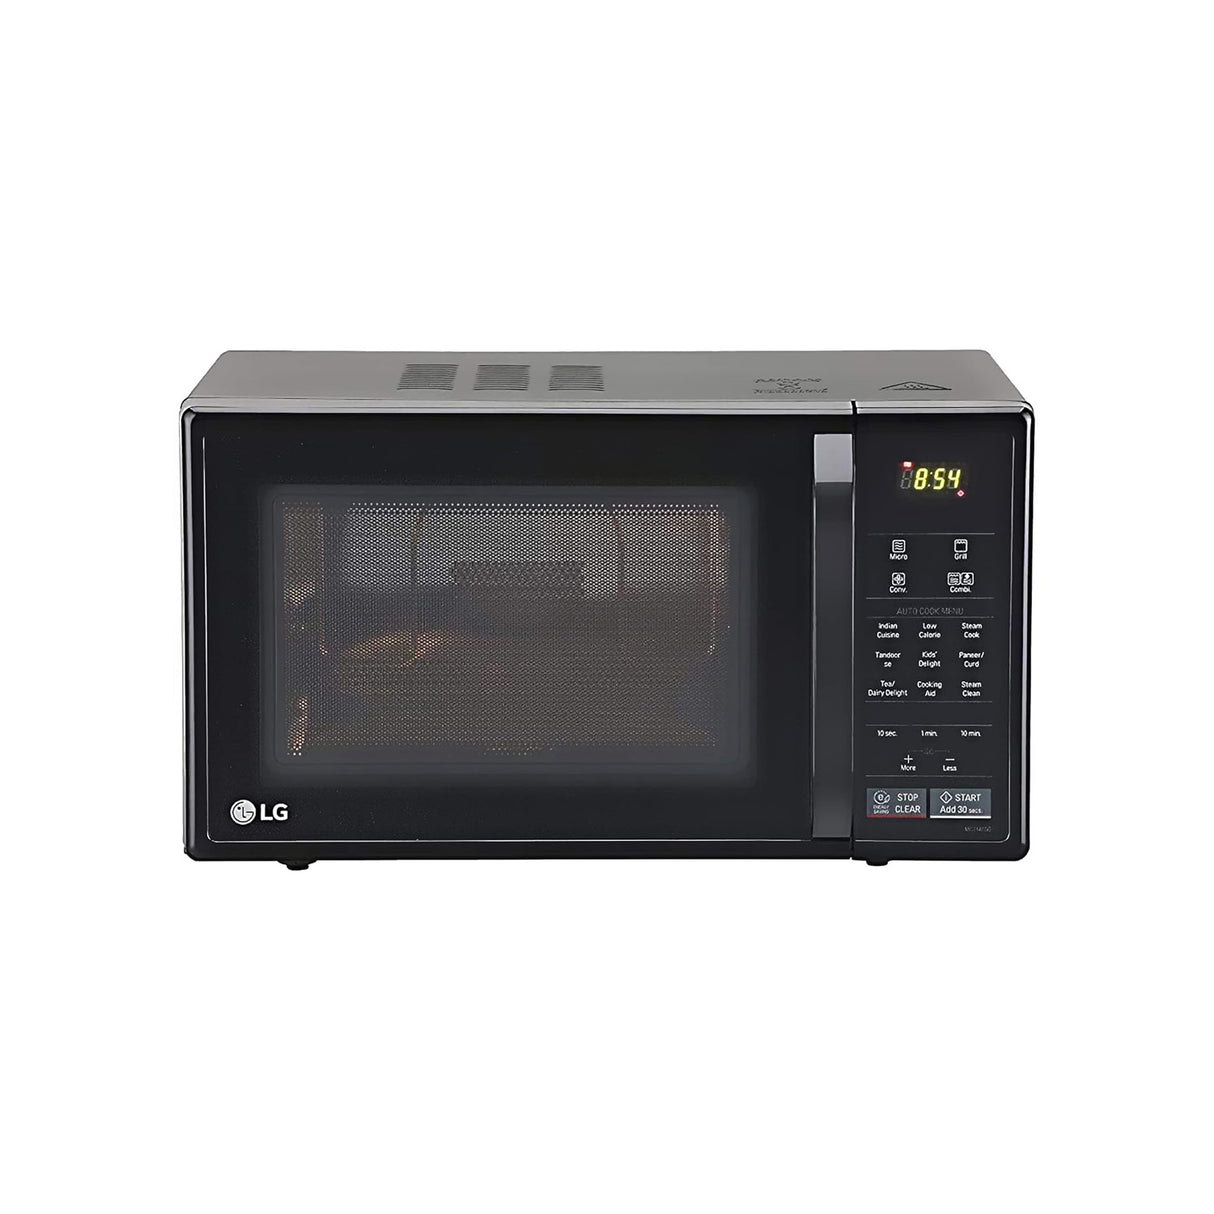 LG 21 L Convection Microwave Oven Glossy Black MW MC2146BG